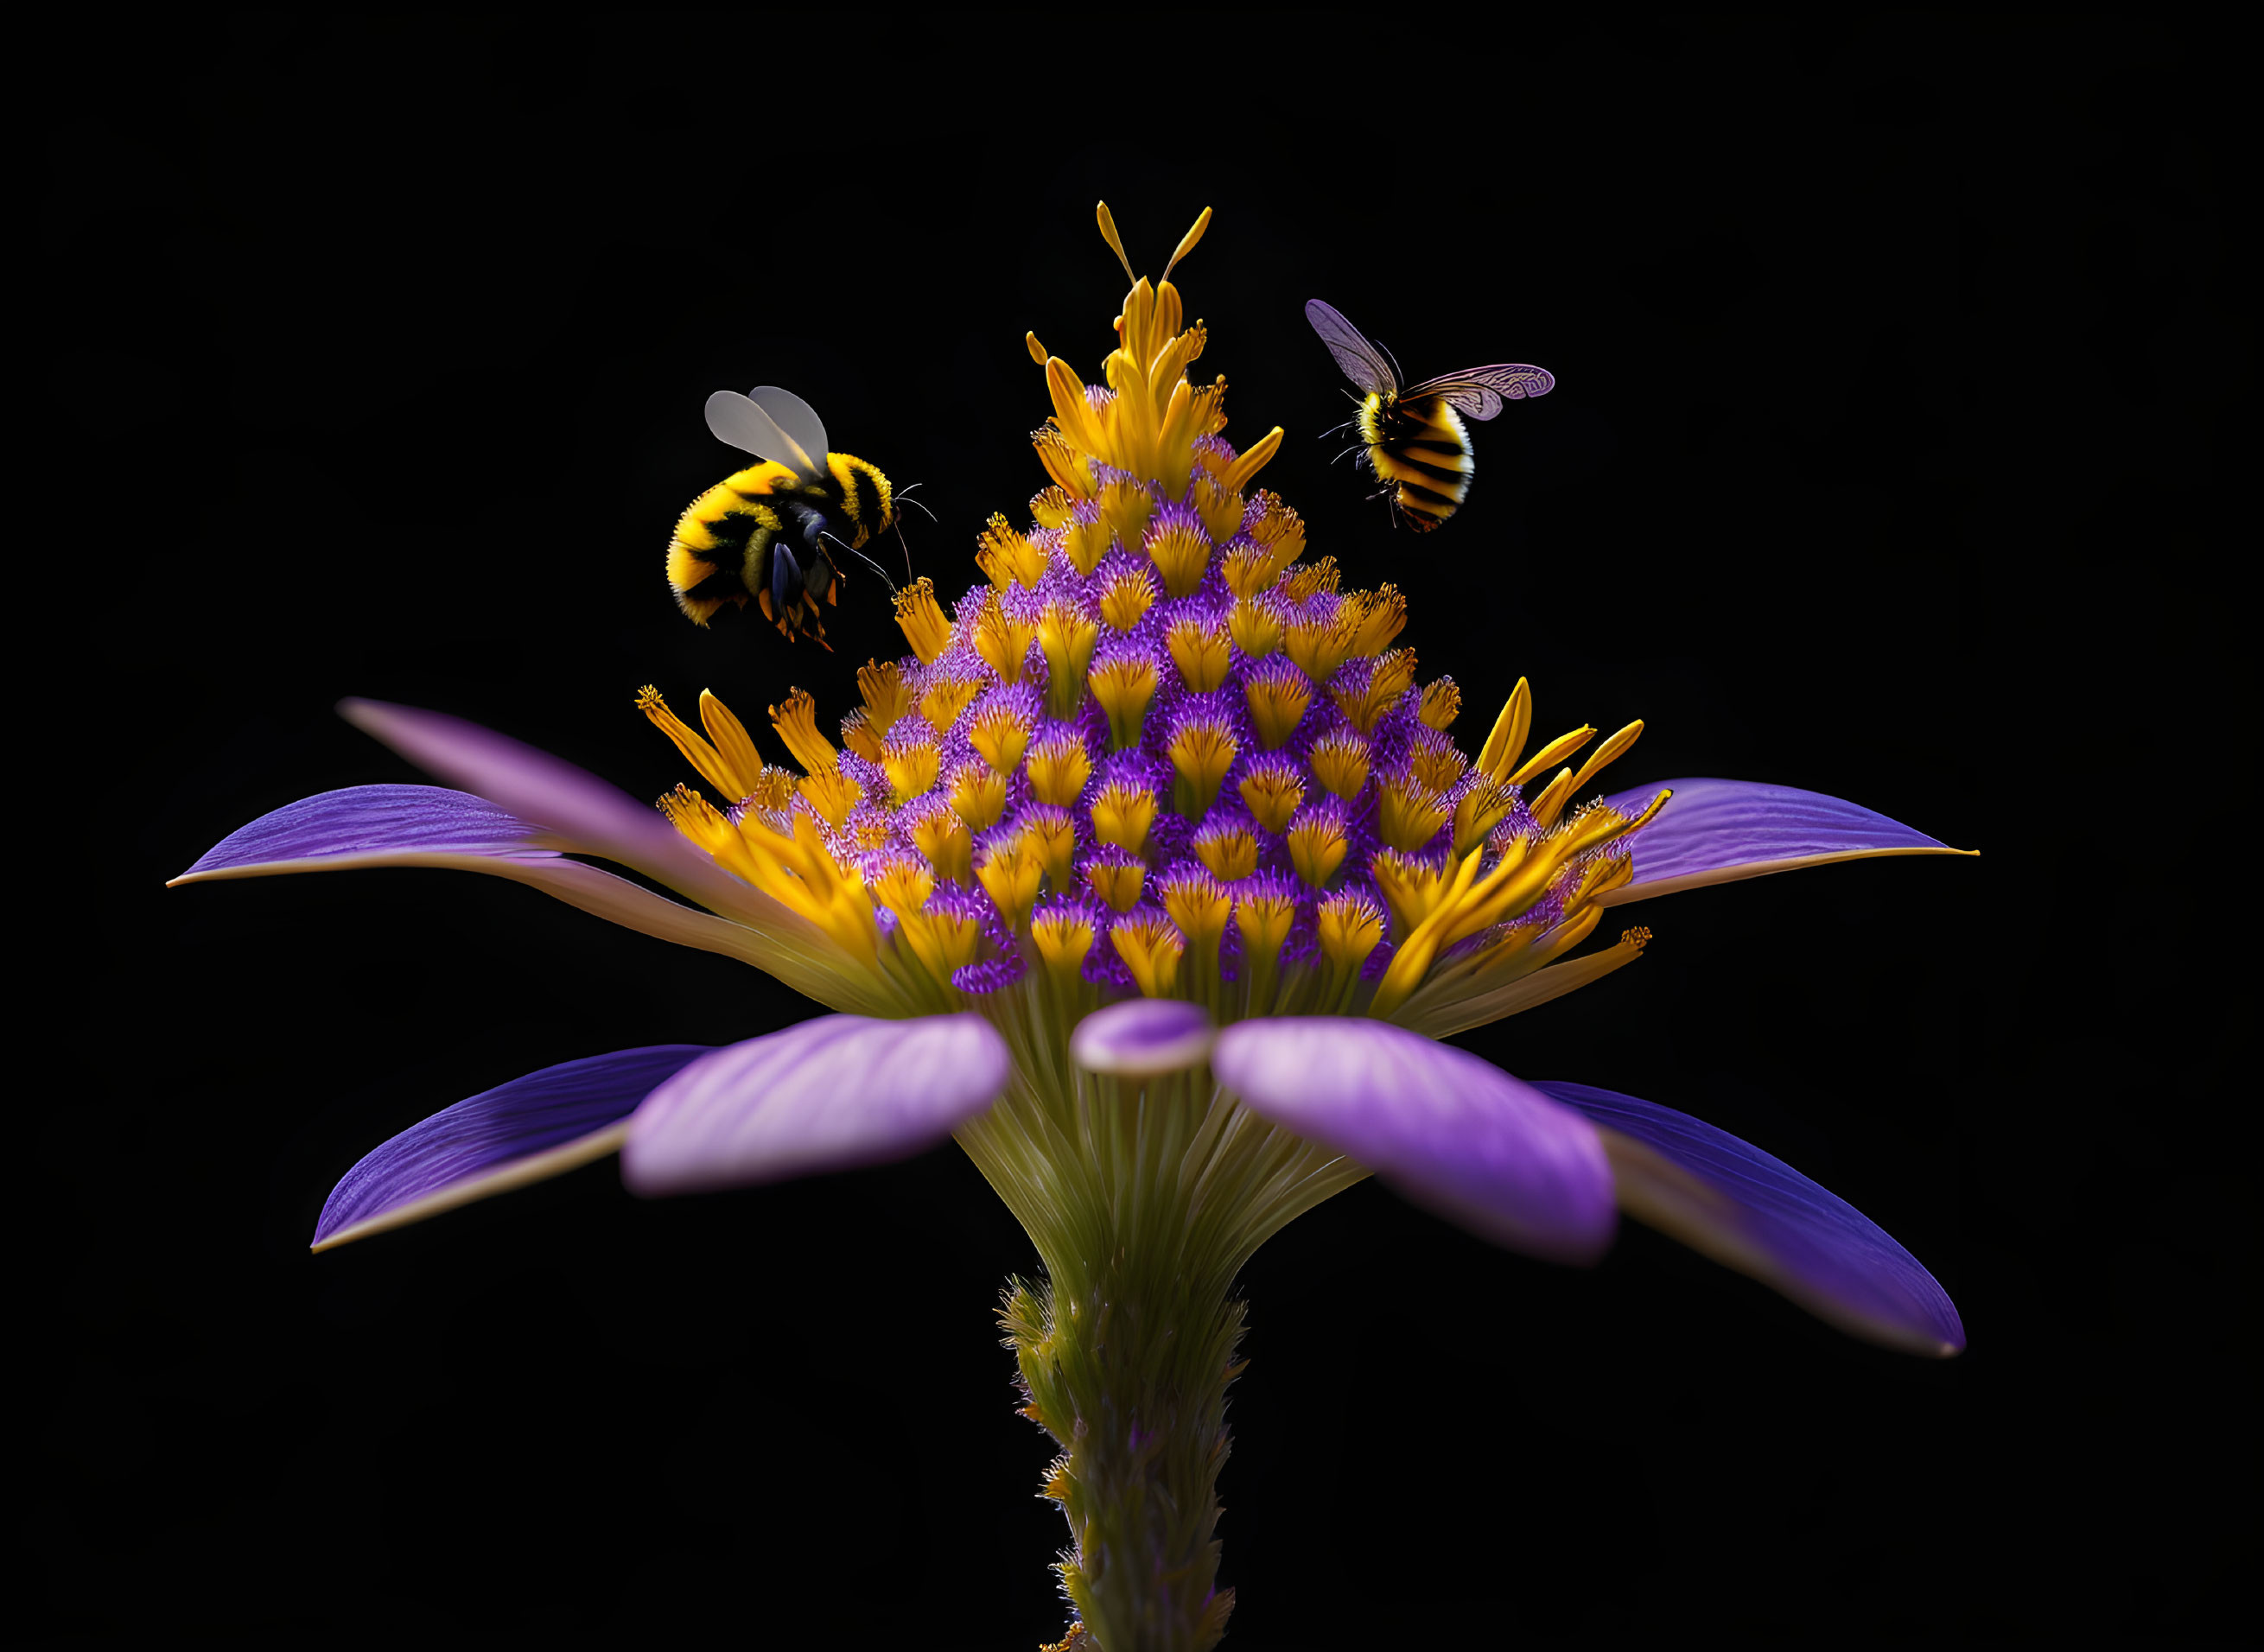 Artichoke and bees